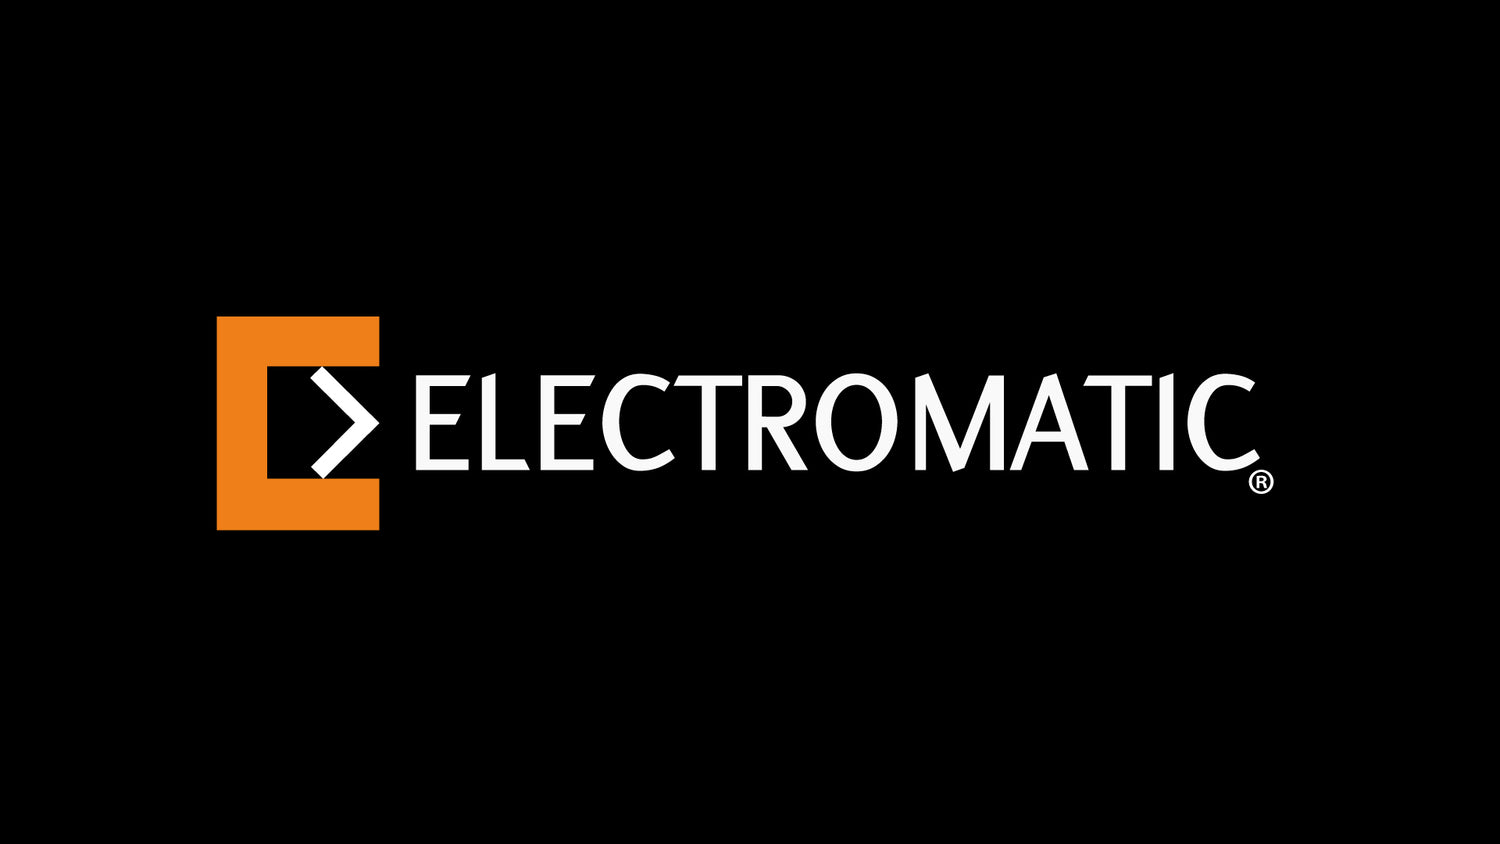 Wallpaper Electromatic - Portões e Automatismos